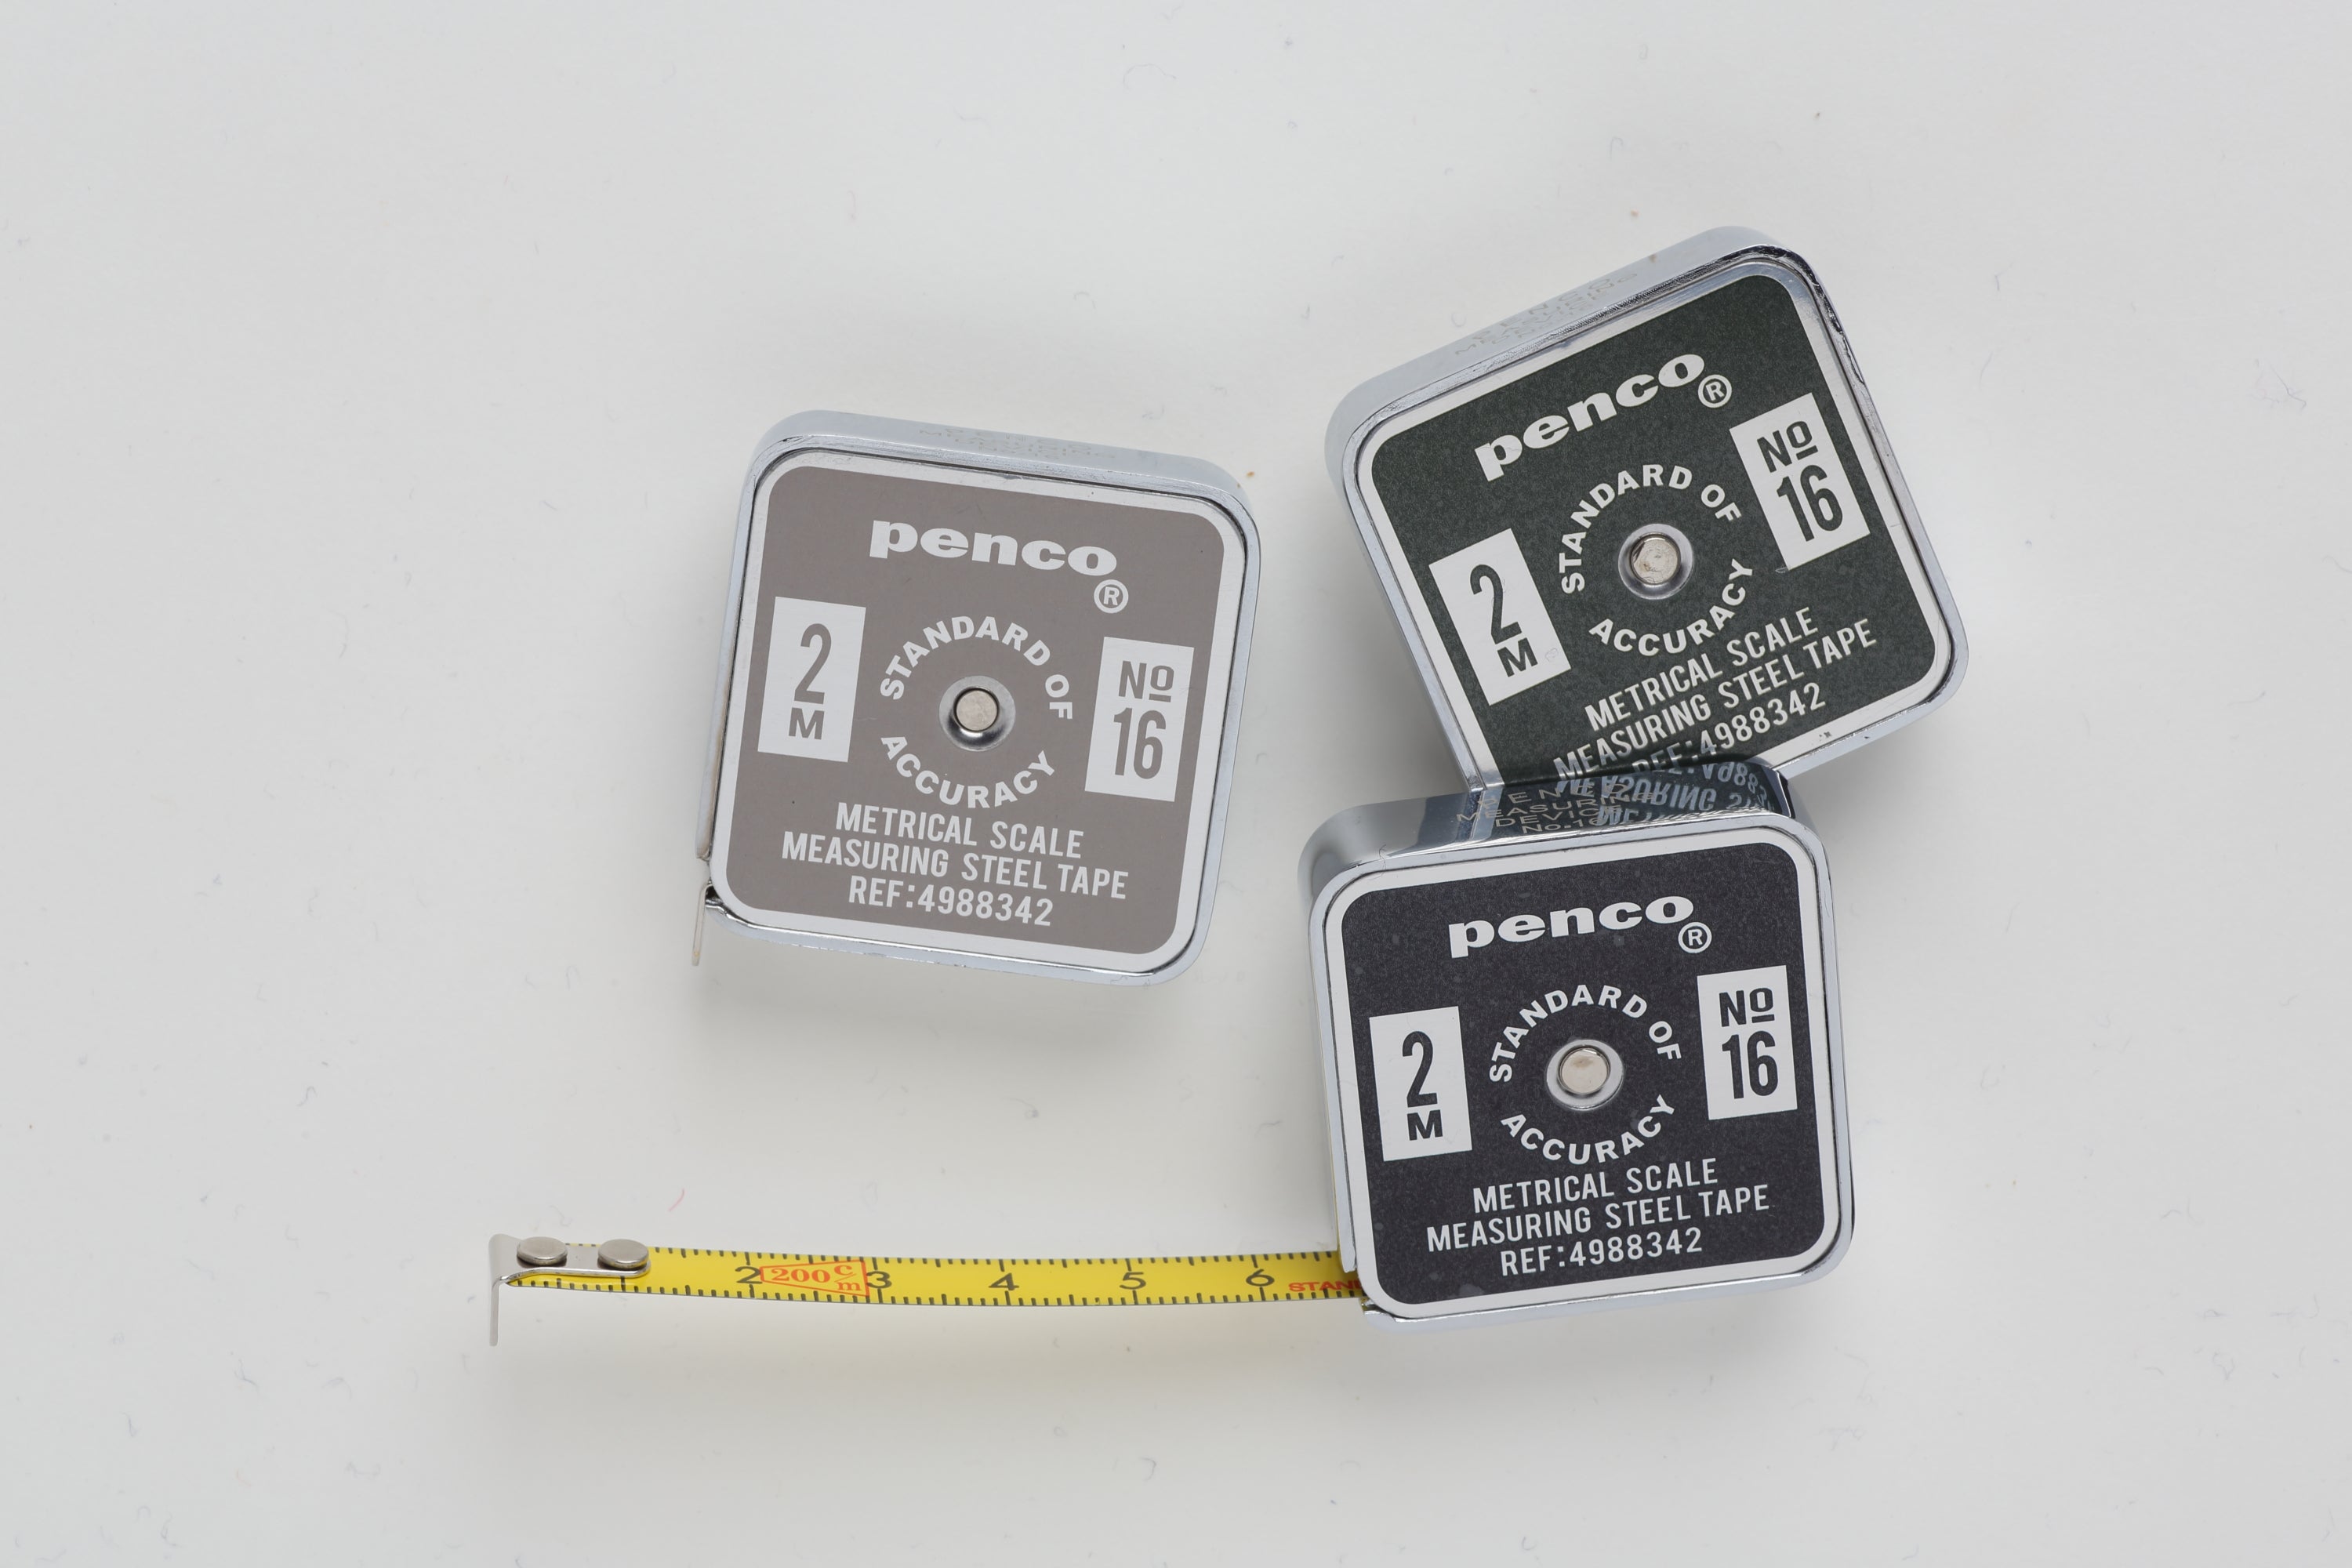 Pocket tape measure TOP CONVE2mx13mm TAJIMA - merXu - Negotiate prices!  Wholesale purchases!